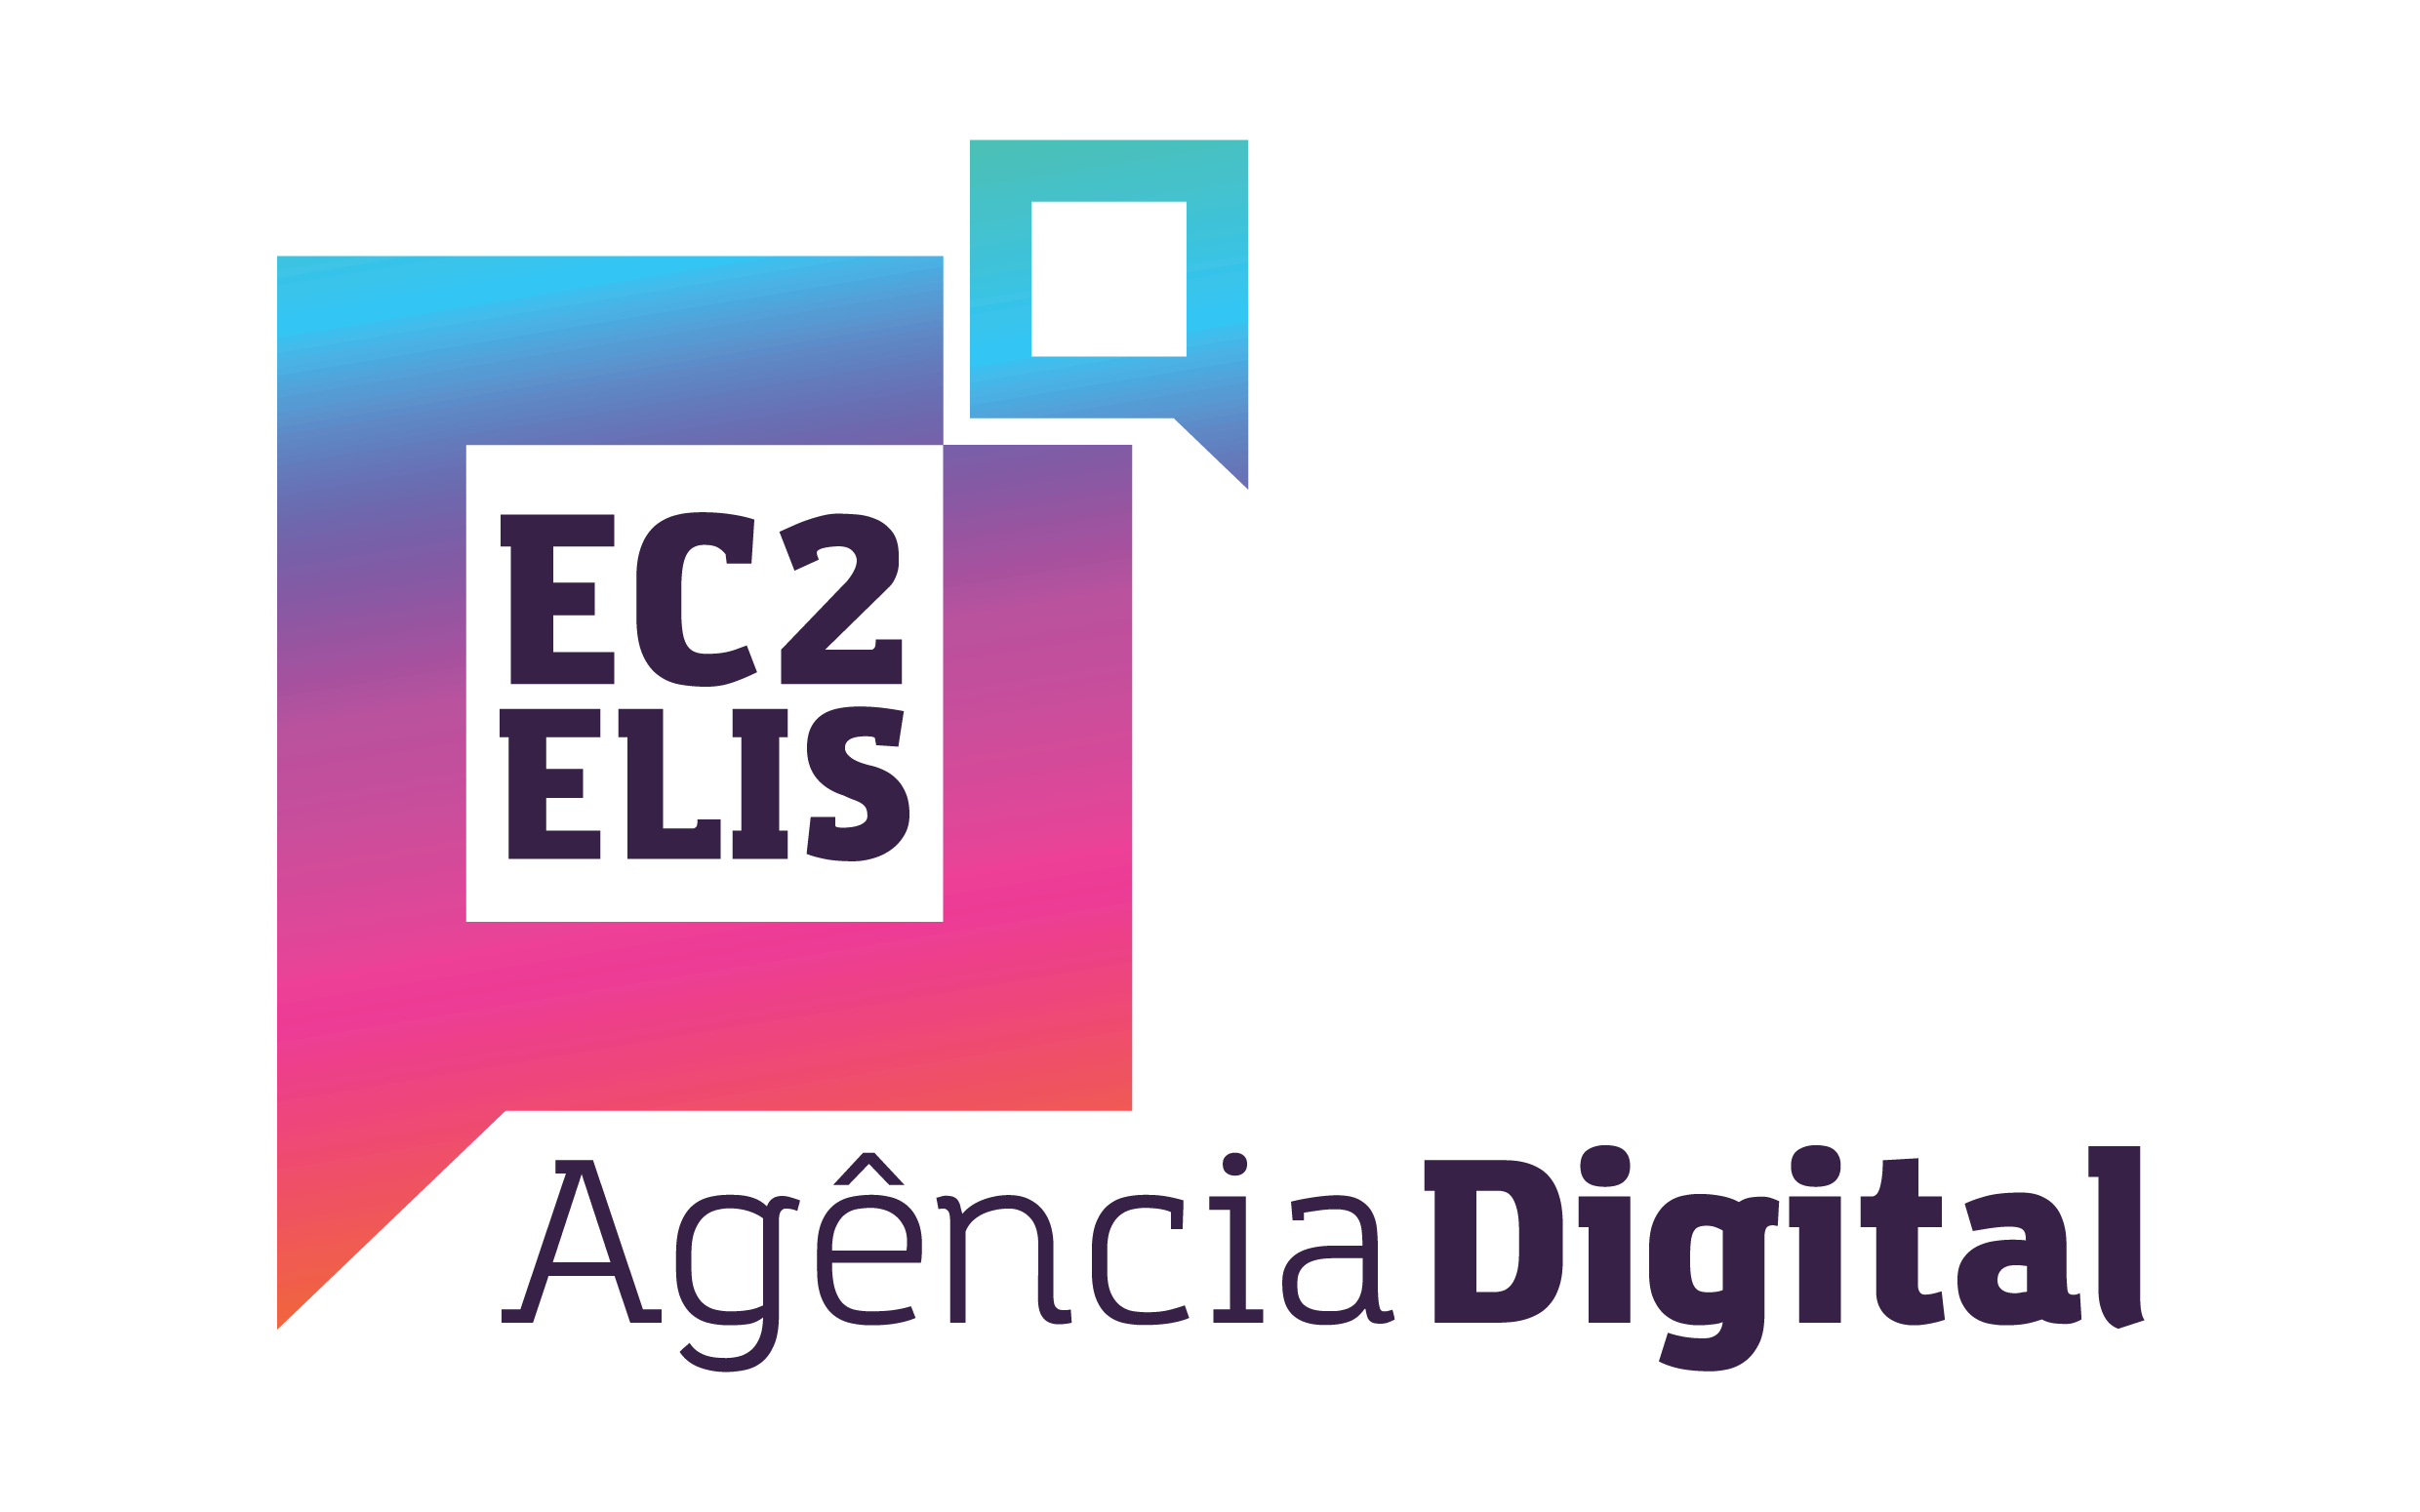 EC2Elis Agência Digital